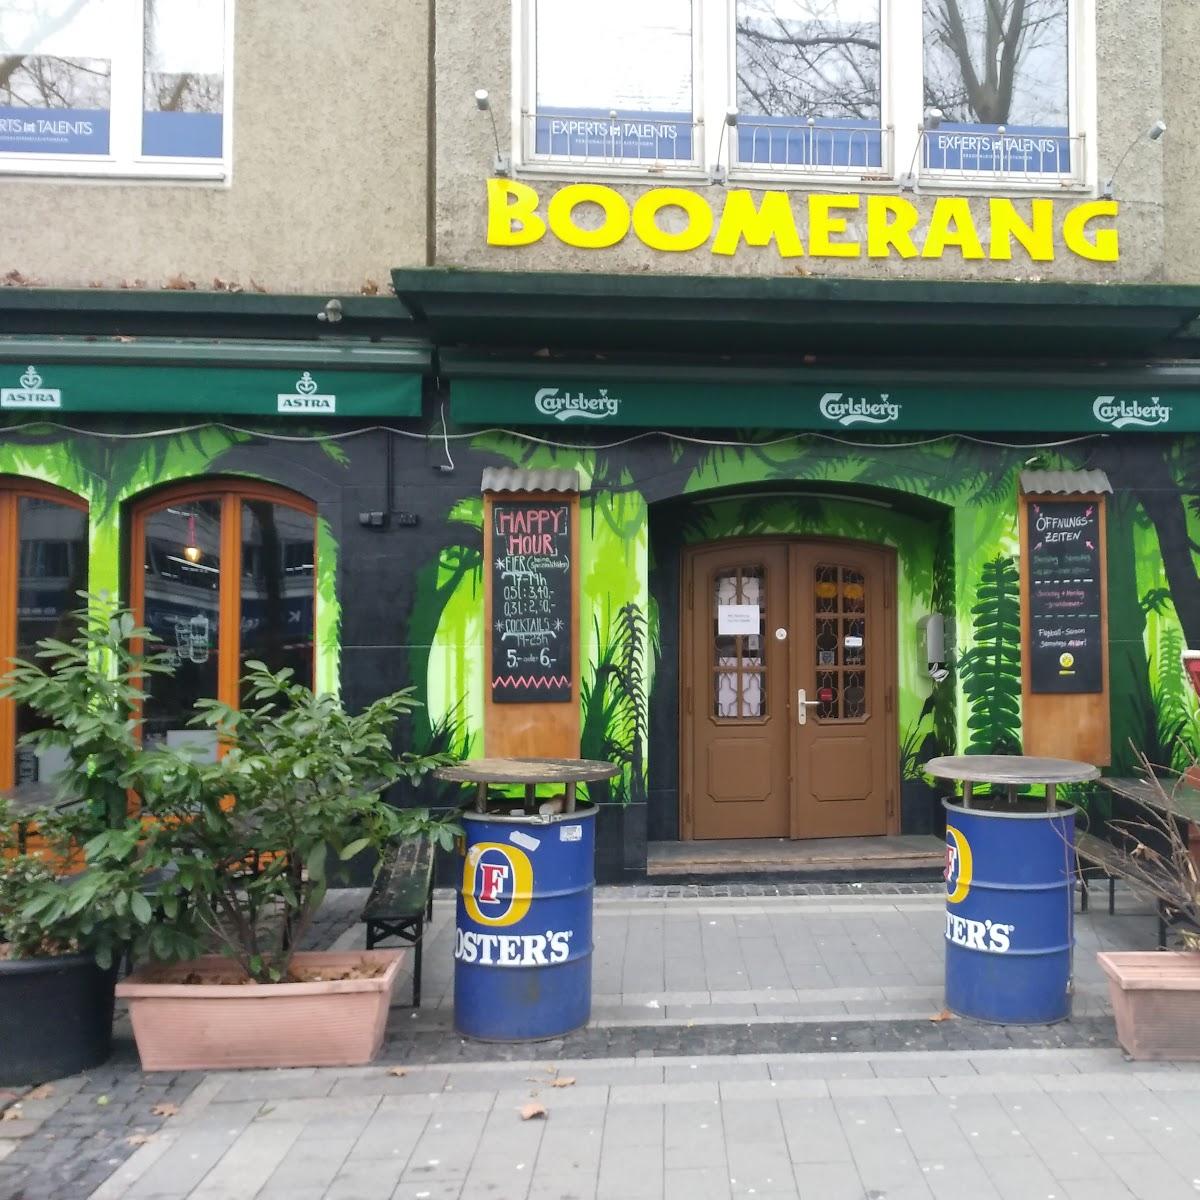 Restaurant "Boomerang Australian Pub & Grill" in Dortmund